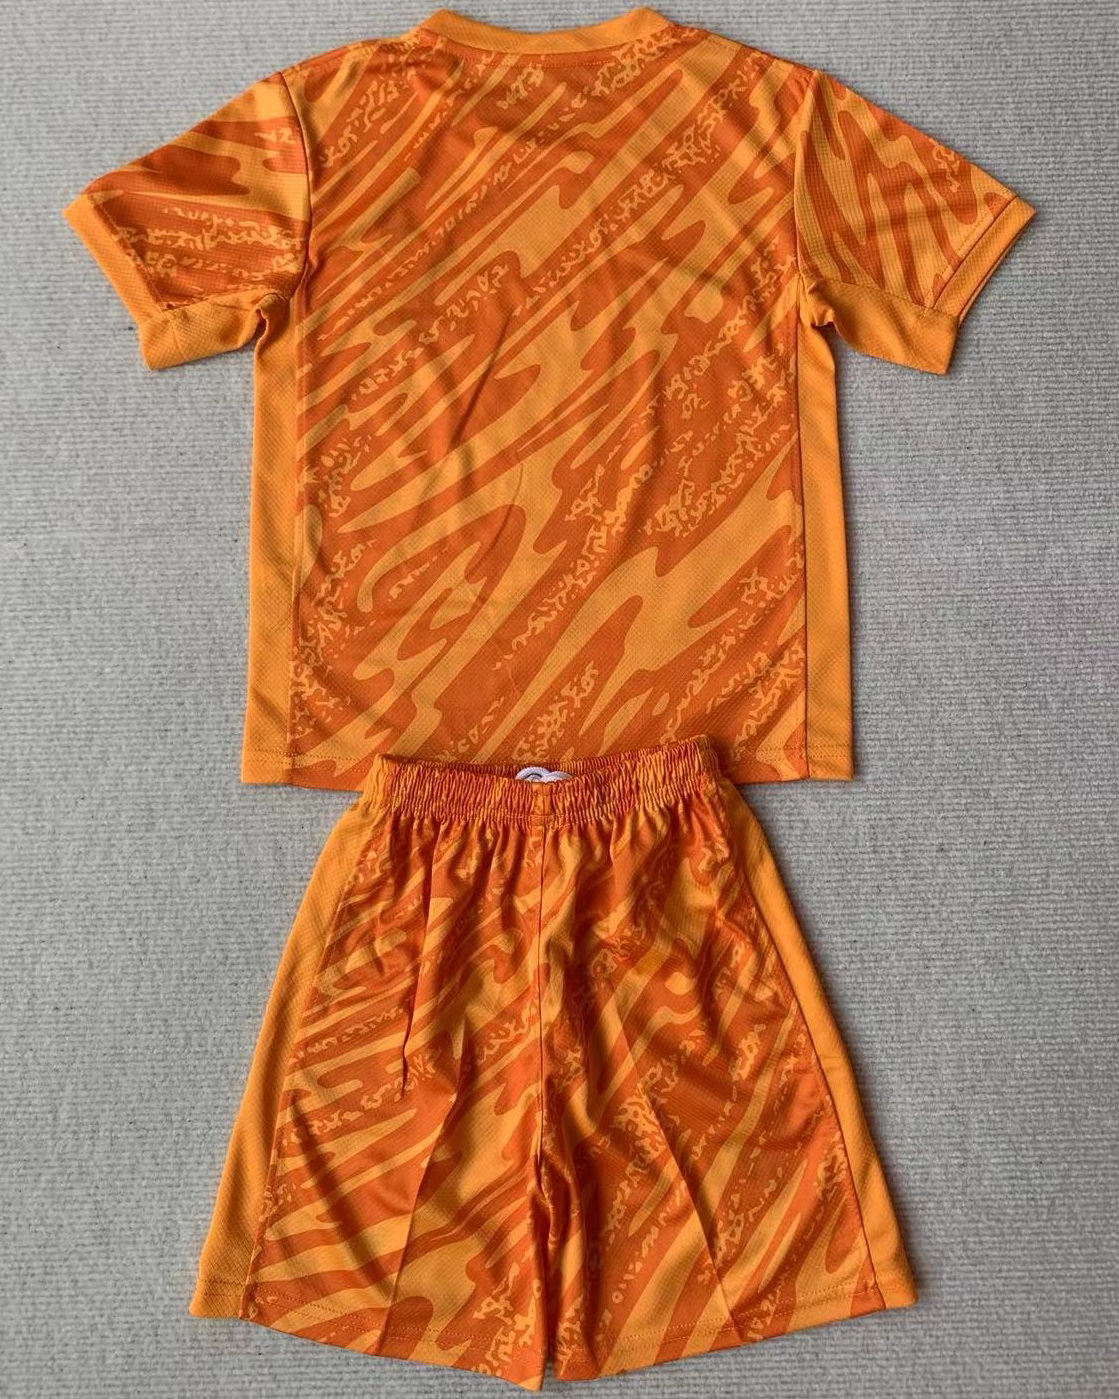 Kid France 2024 European Cup Goalkeeper Orange Jersey Kit